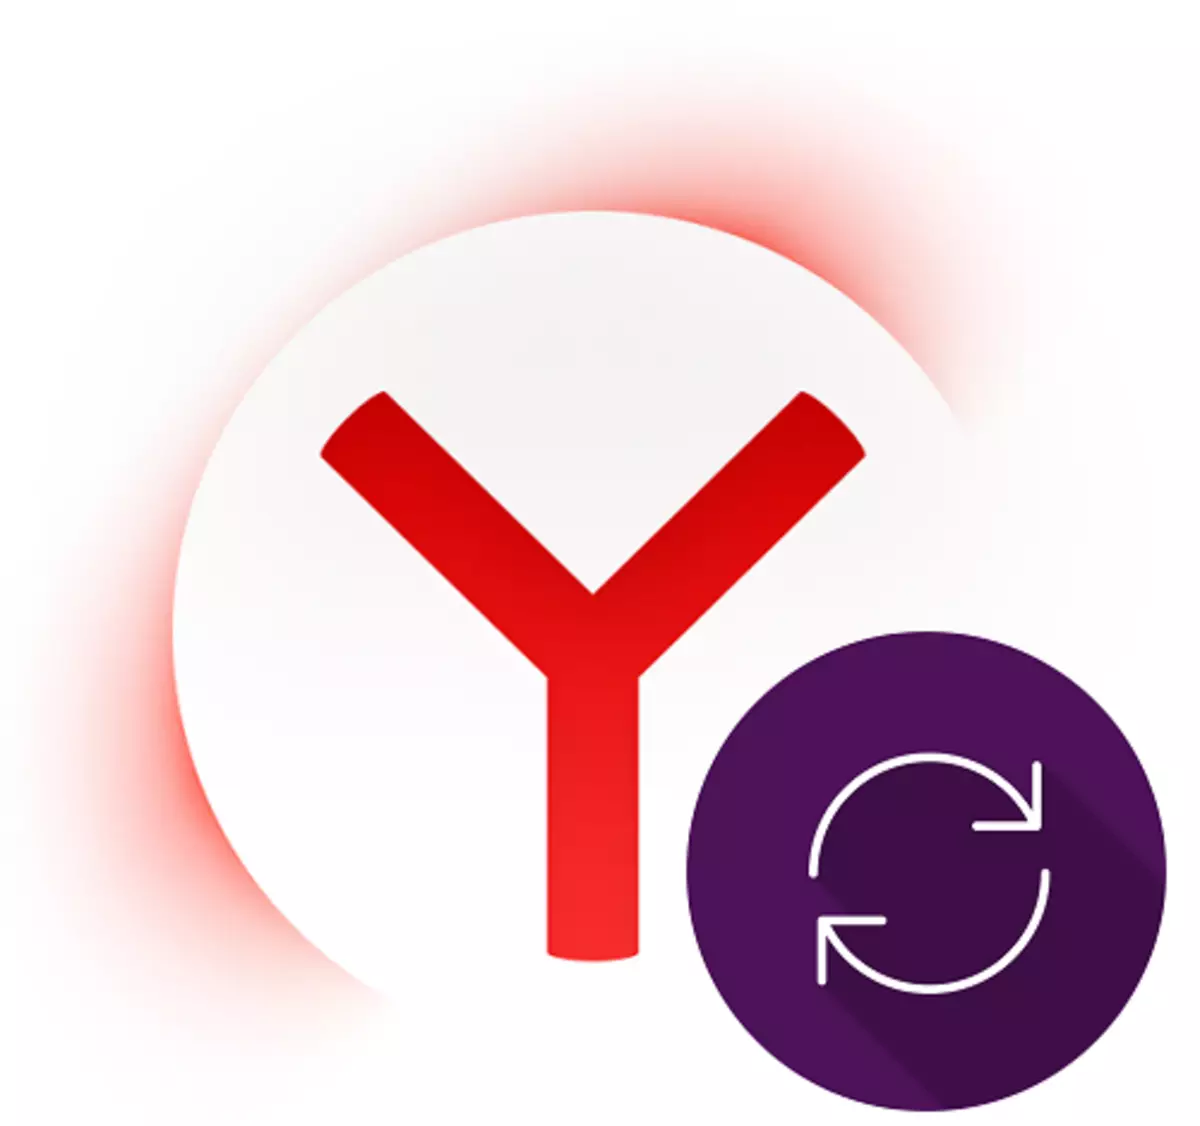 Yandex.baUser యొక్క సమకాలీకరణ